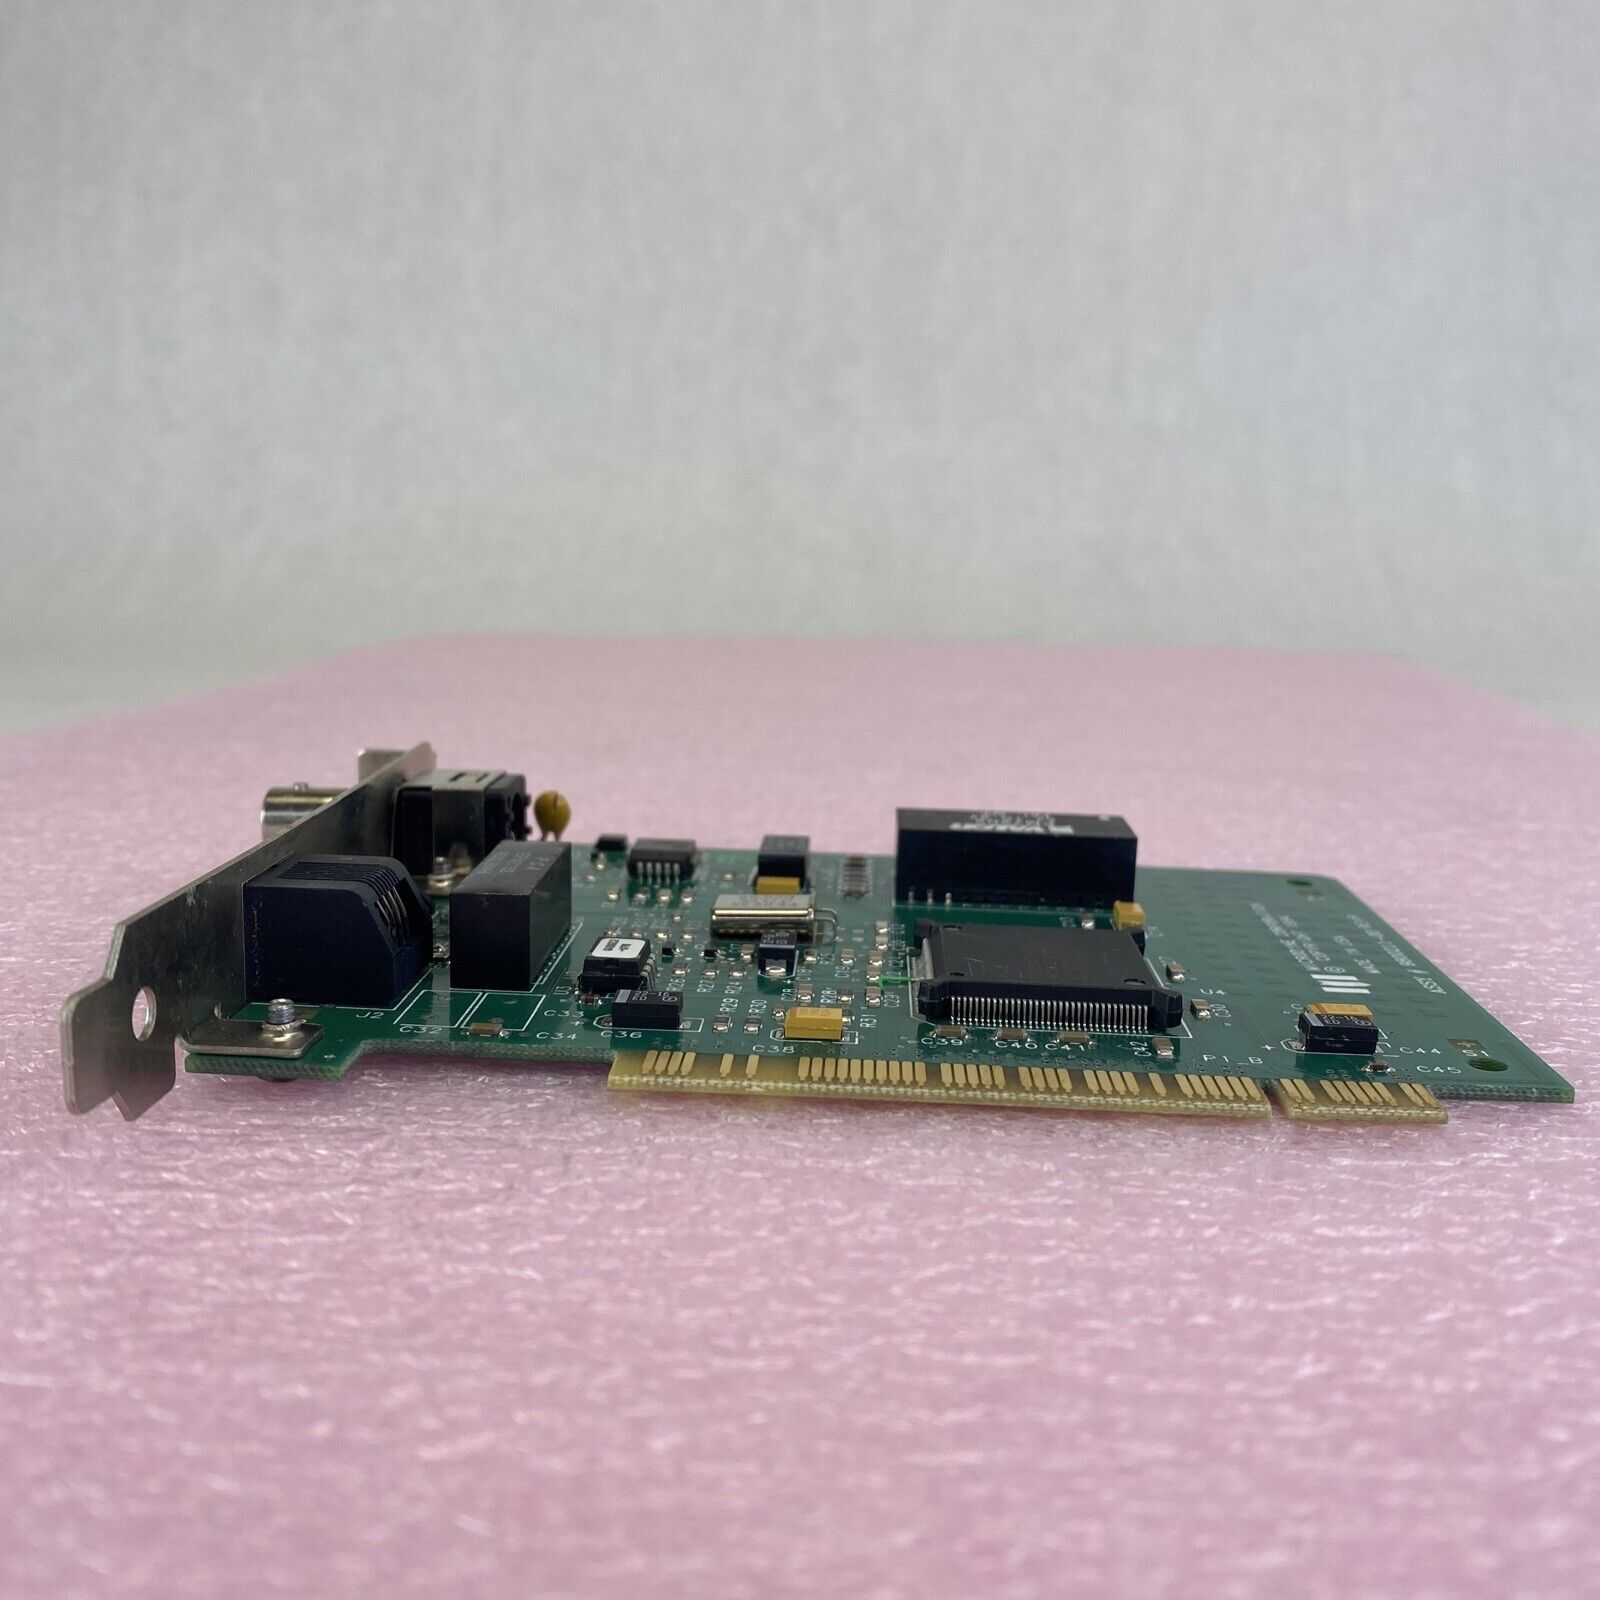 Microdyne NE5500plus RJ45 Coaxial PCI card